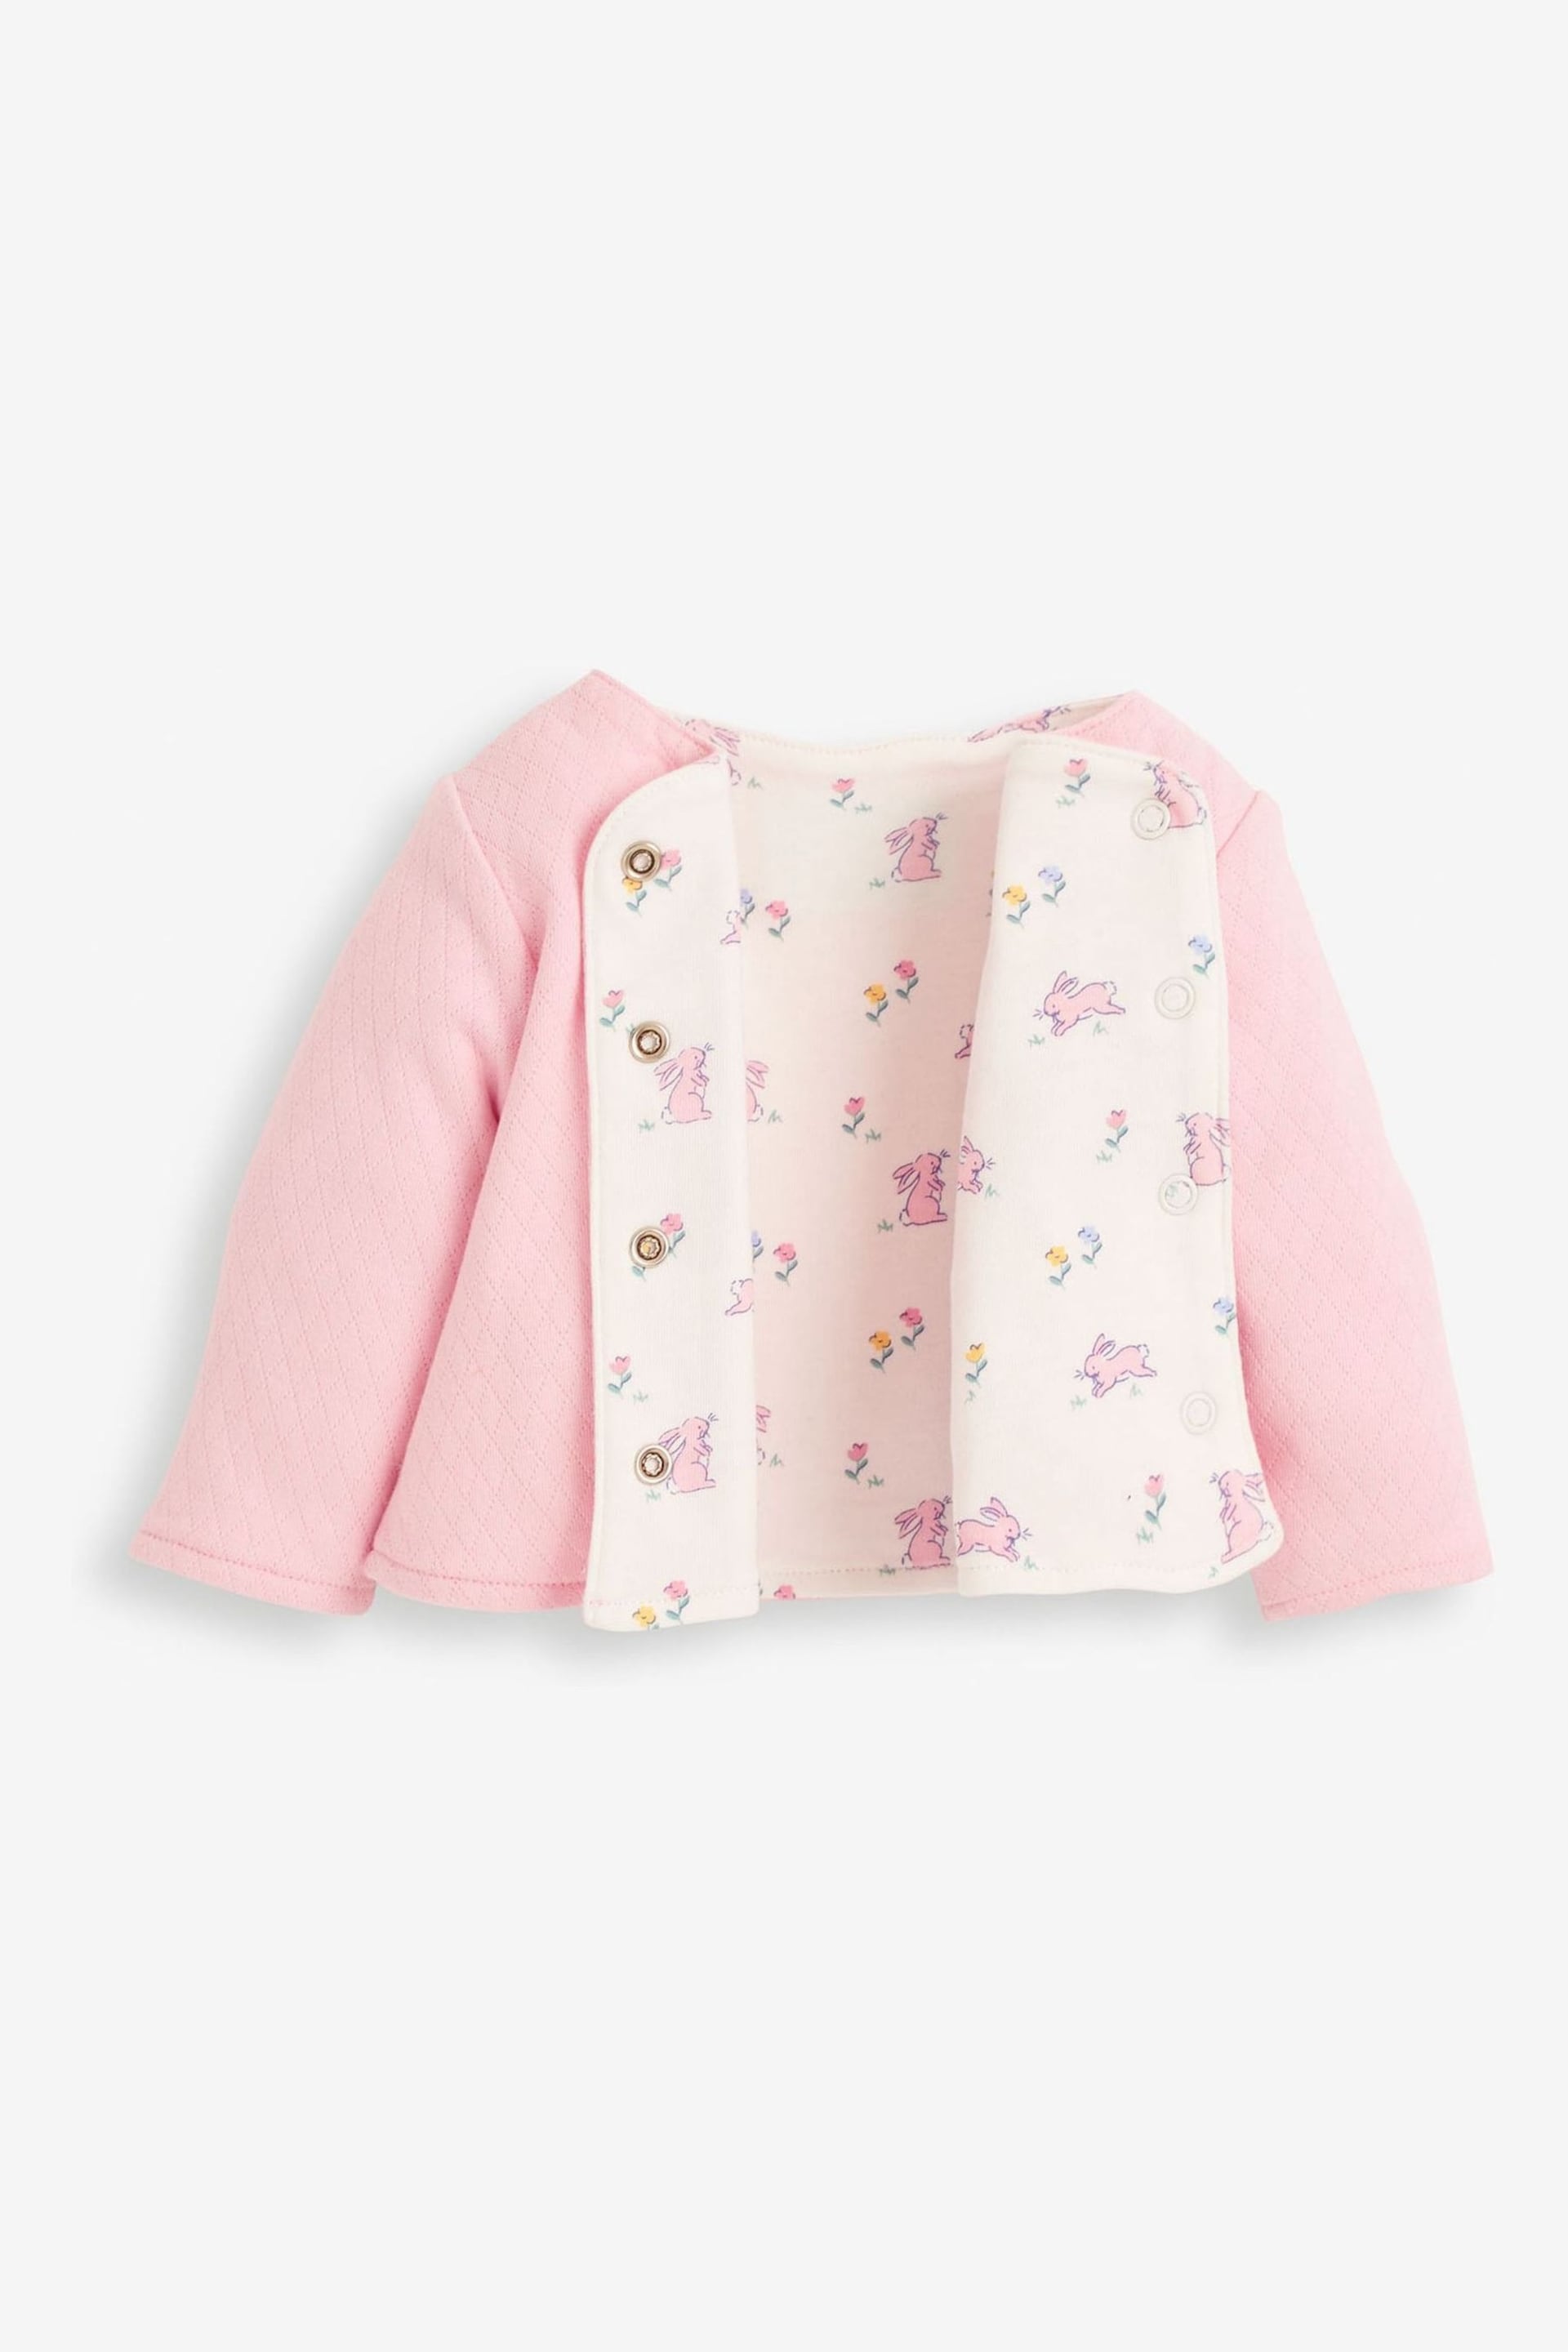 JoJo Maman Bébé Pink 2-Piece Cotton Baby Bunny Sleepsuit & Jacket Set - Image 4 of 5